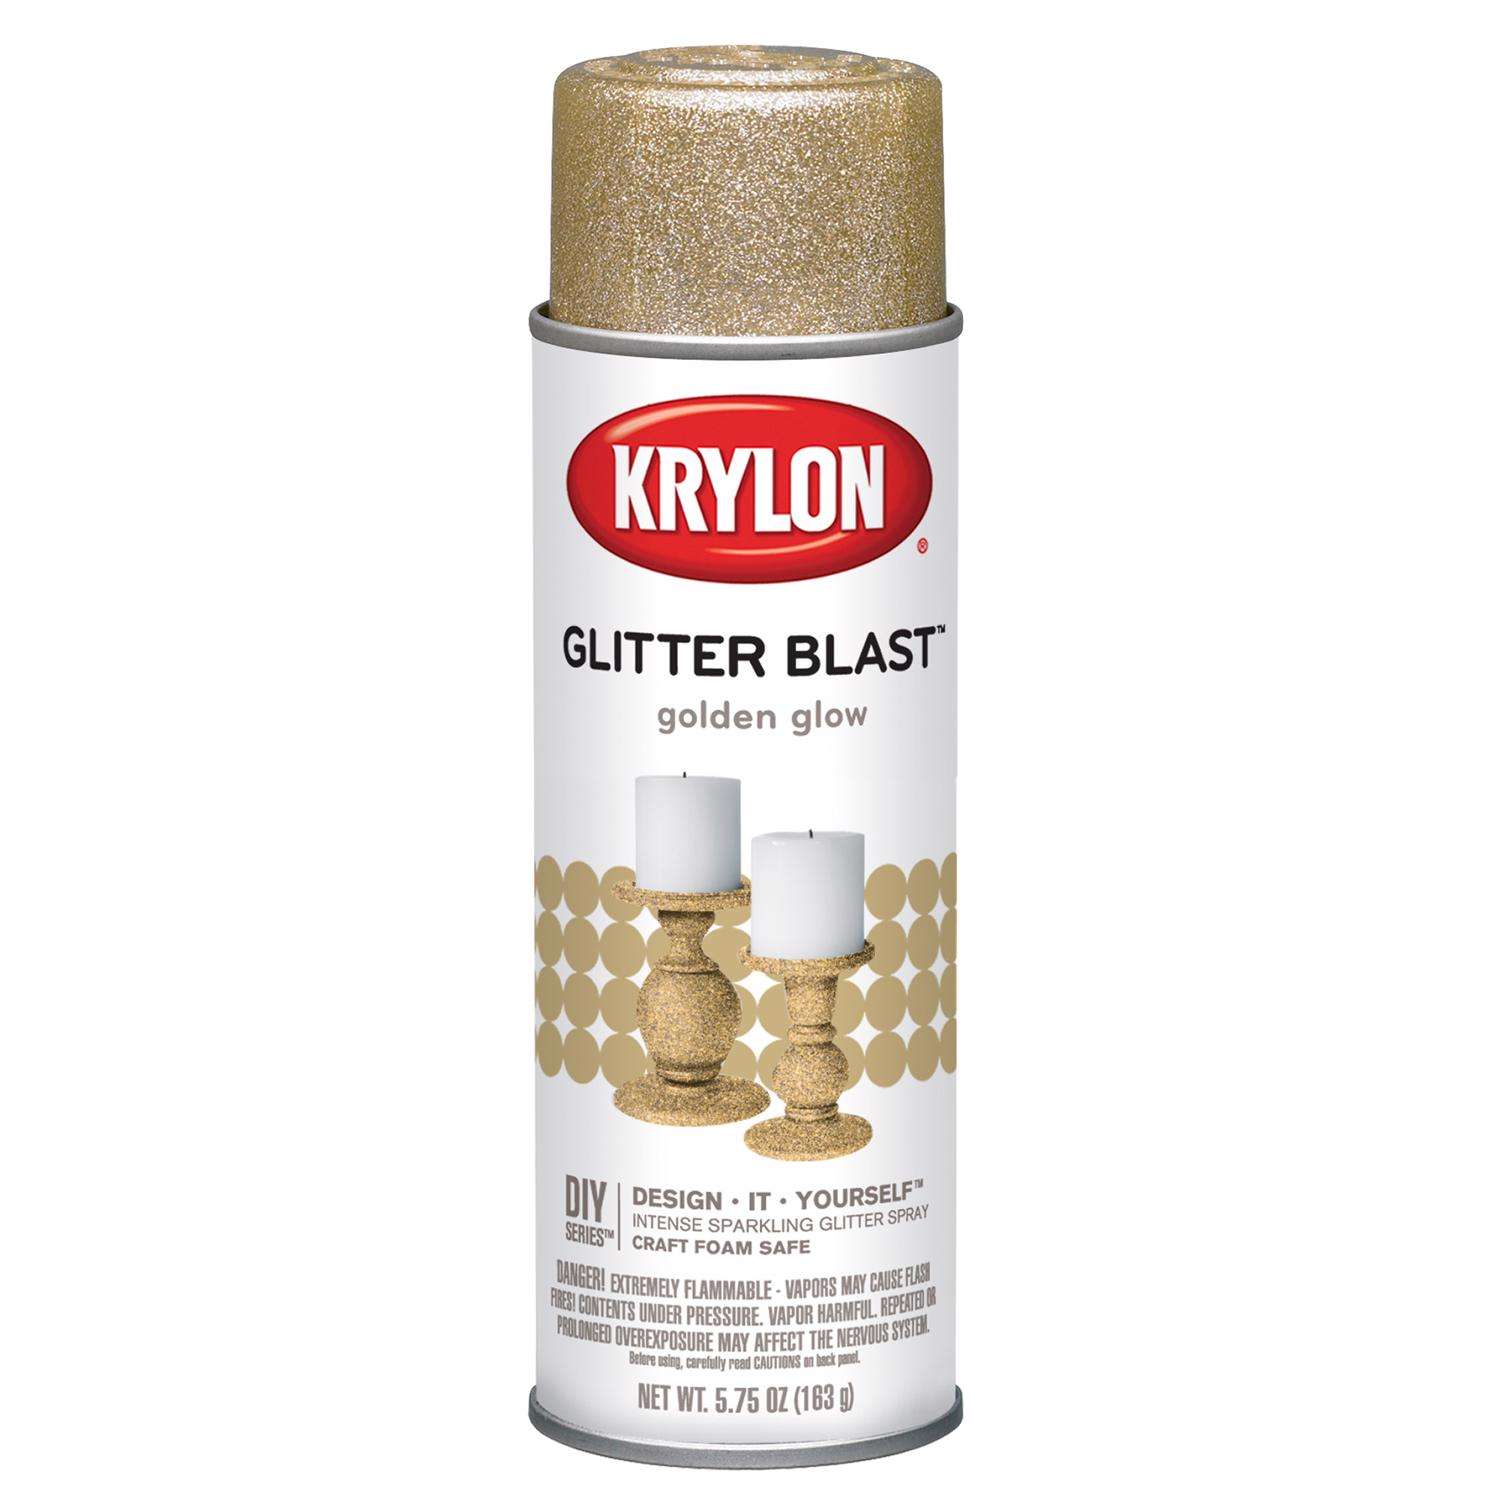 Krylon Glitter Blast Golden Glow Spray Paint 5.75 oz - Ace Hardware